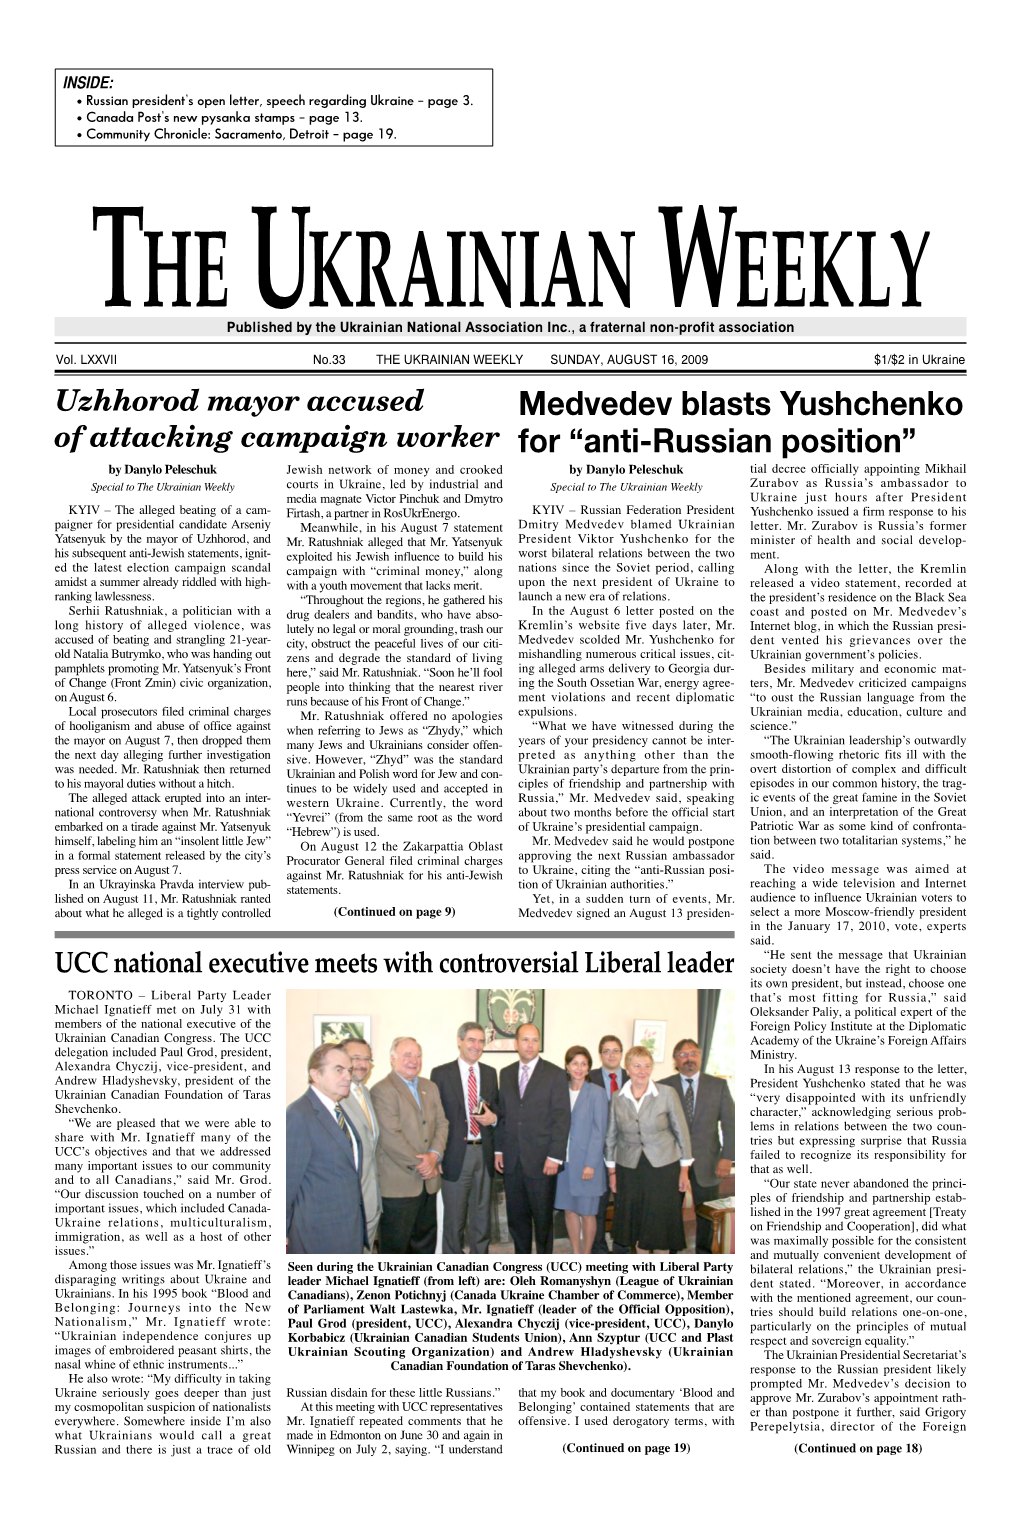 The Ukrainian Weekly 2009, No.33